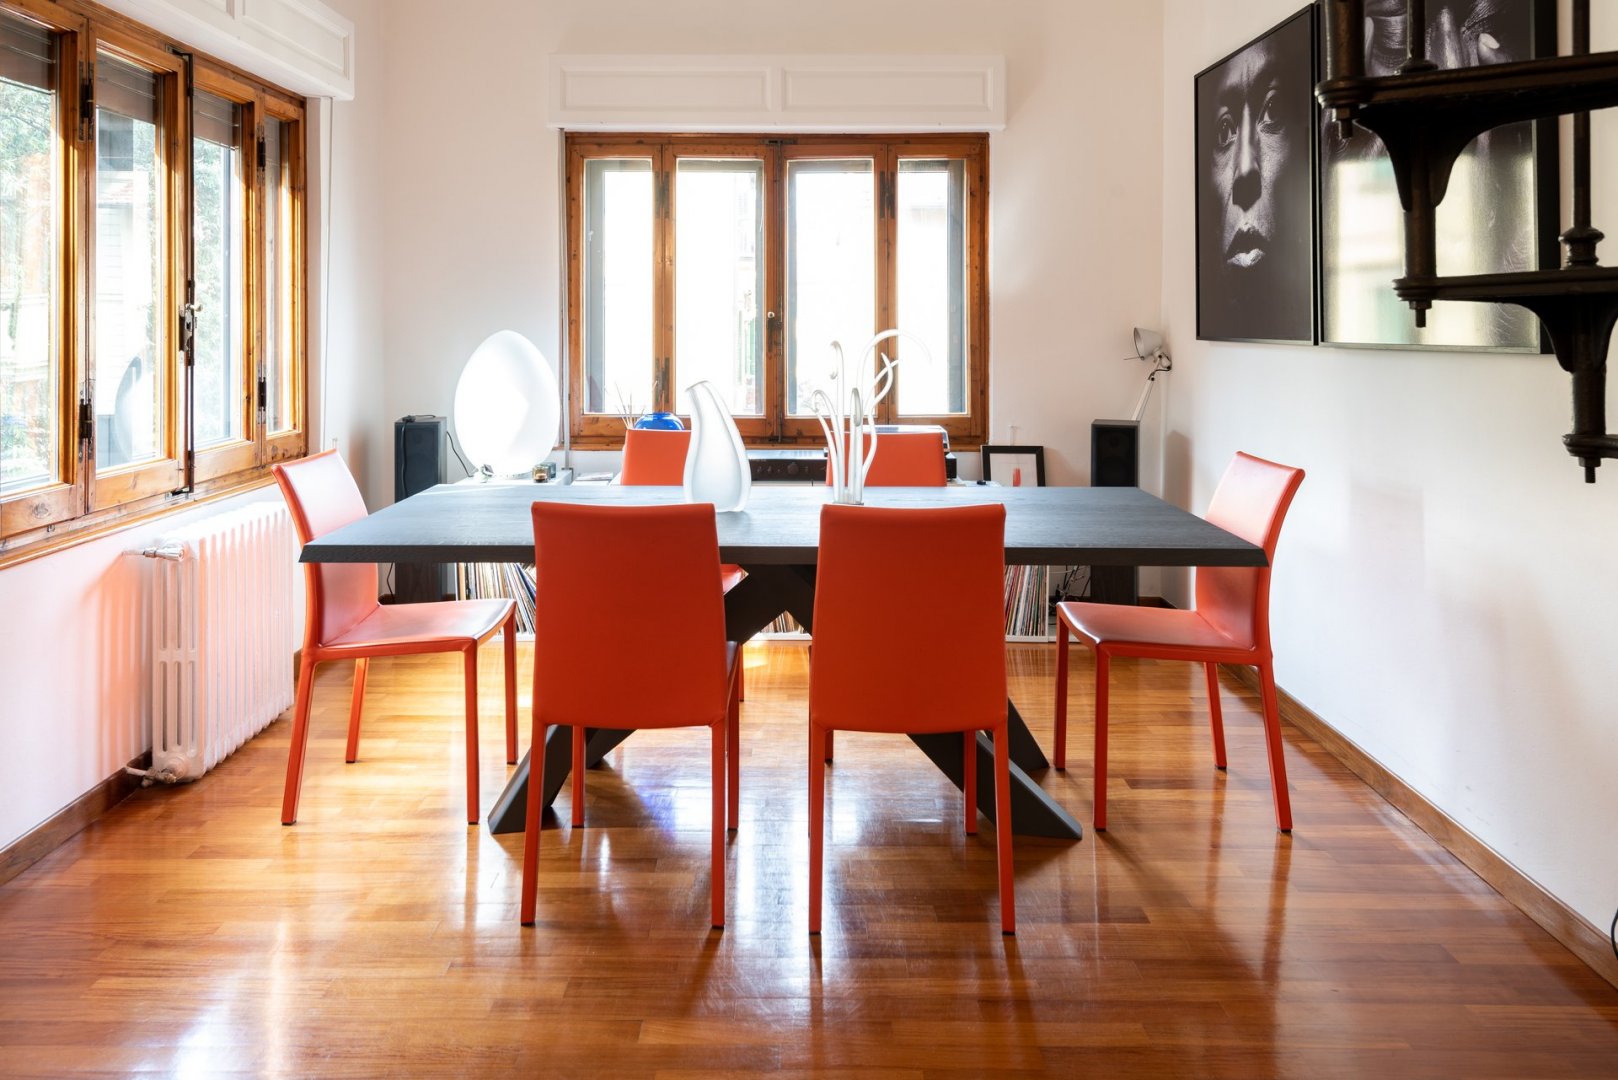 Sarah & Edo's home - Creations - Arredamenti Bianchi furniture and furnishing accessories in Florence